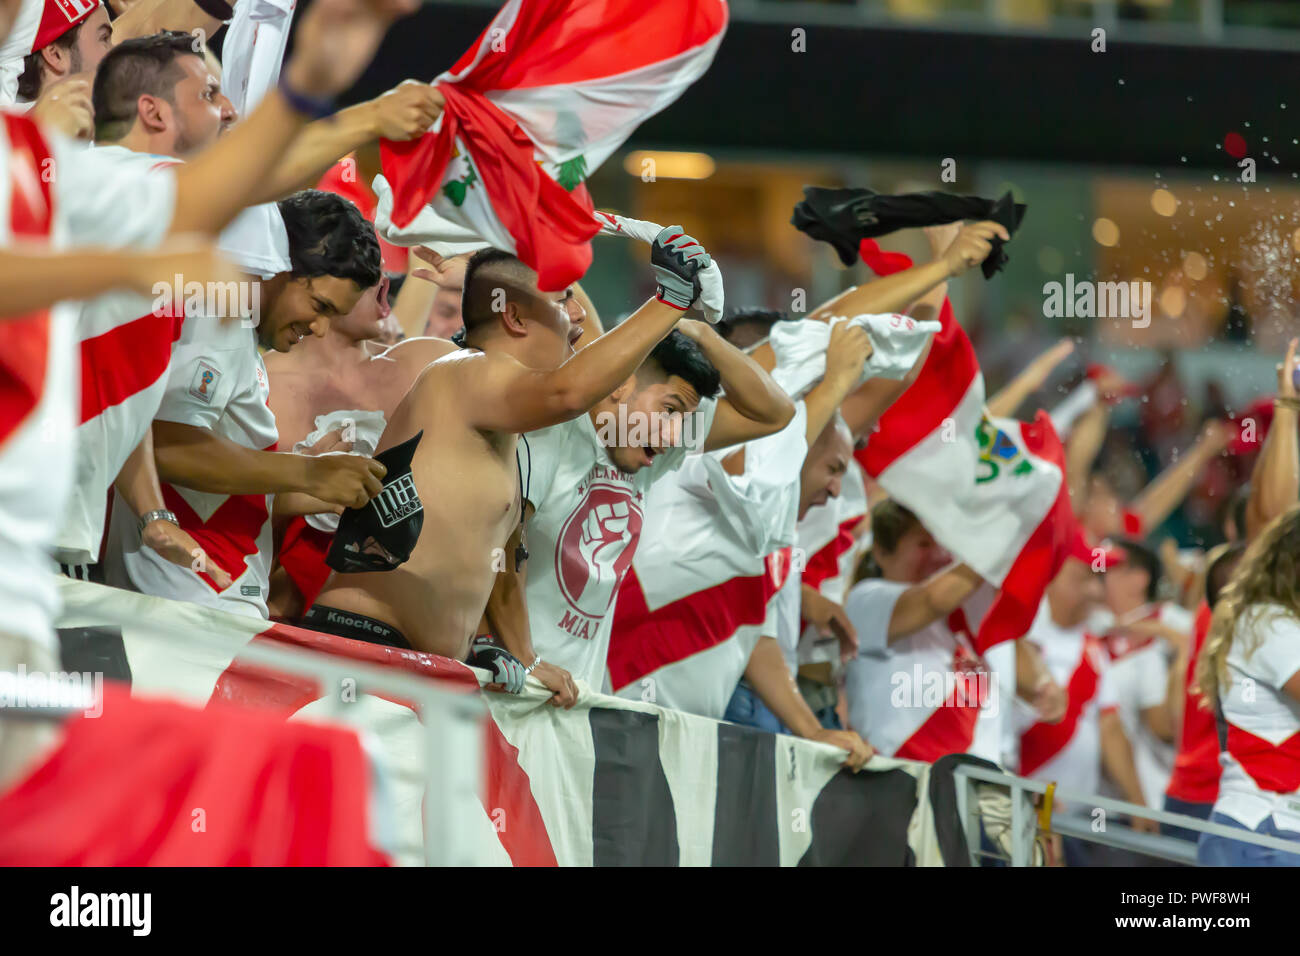 Miami, Florida. 12th Oct, 2018. Soccer fans during Chile vs Peru at Hard Rock Stadium in Miami, Florida. Oct 12, 2018.  Peru won 3-0. Stock Photo